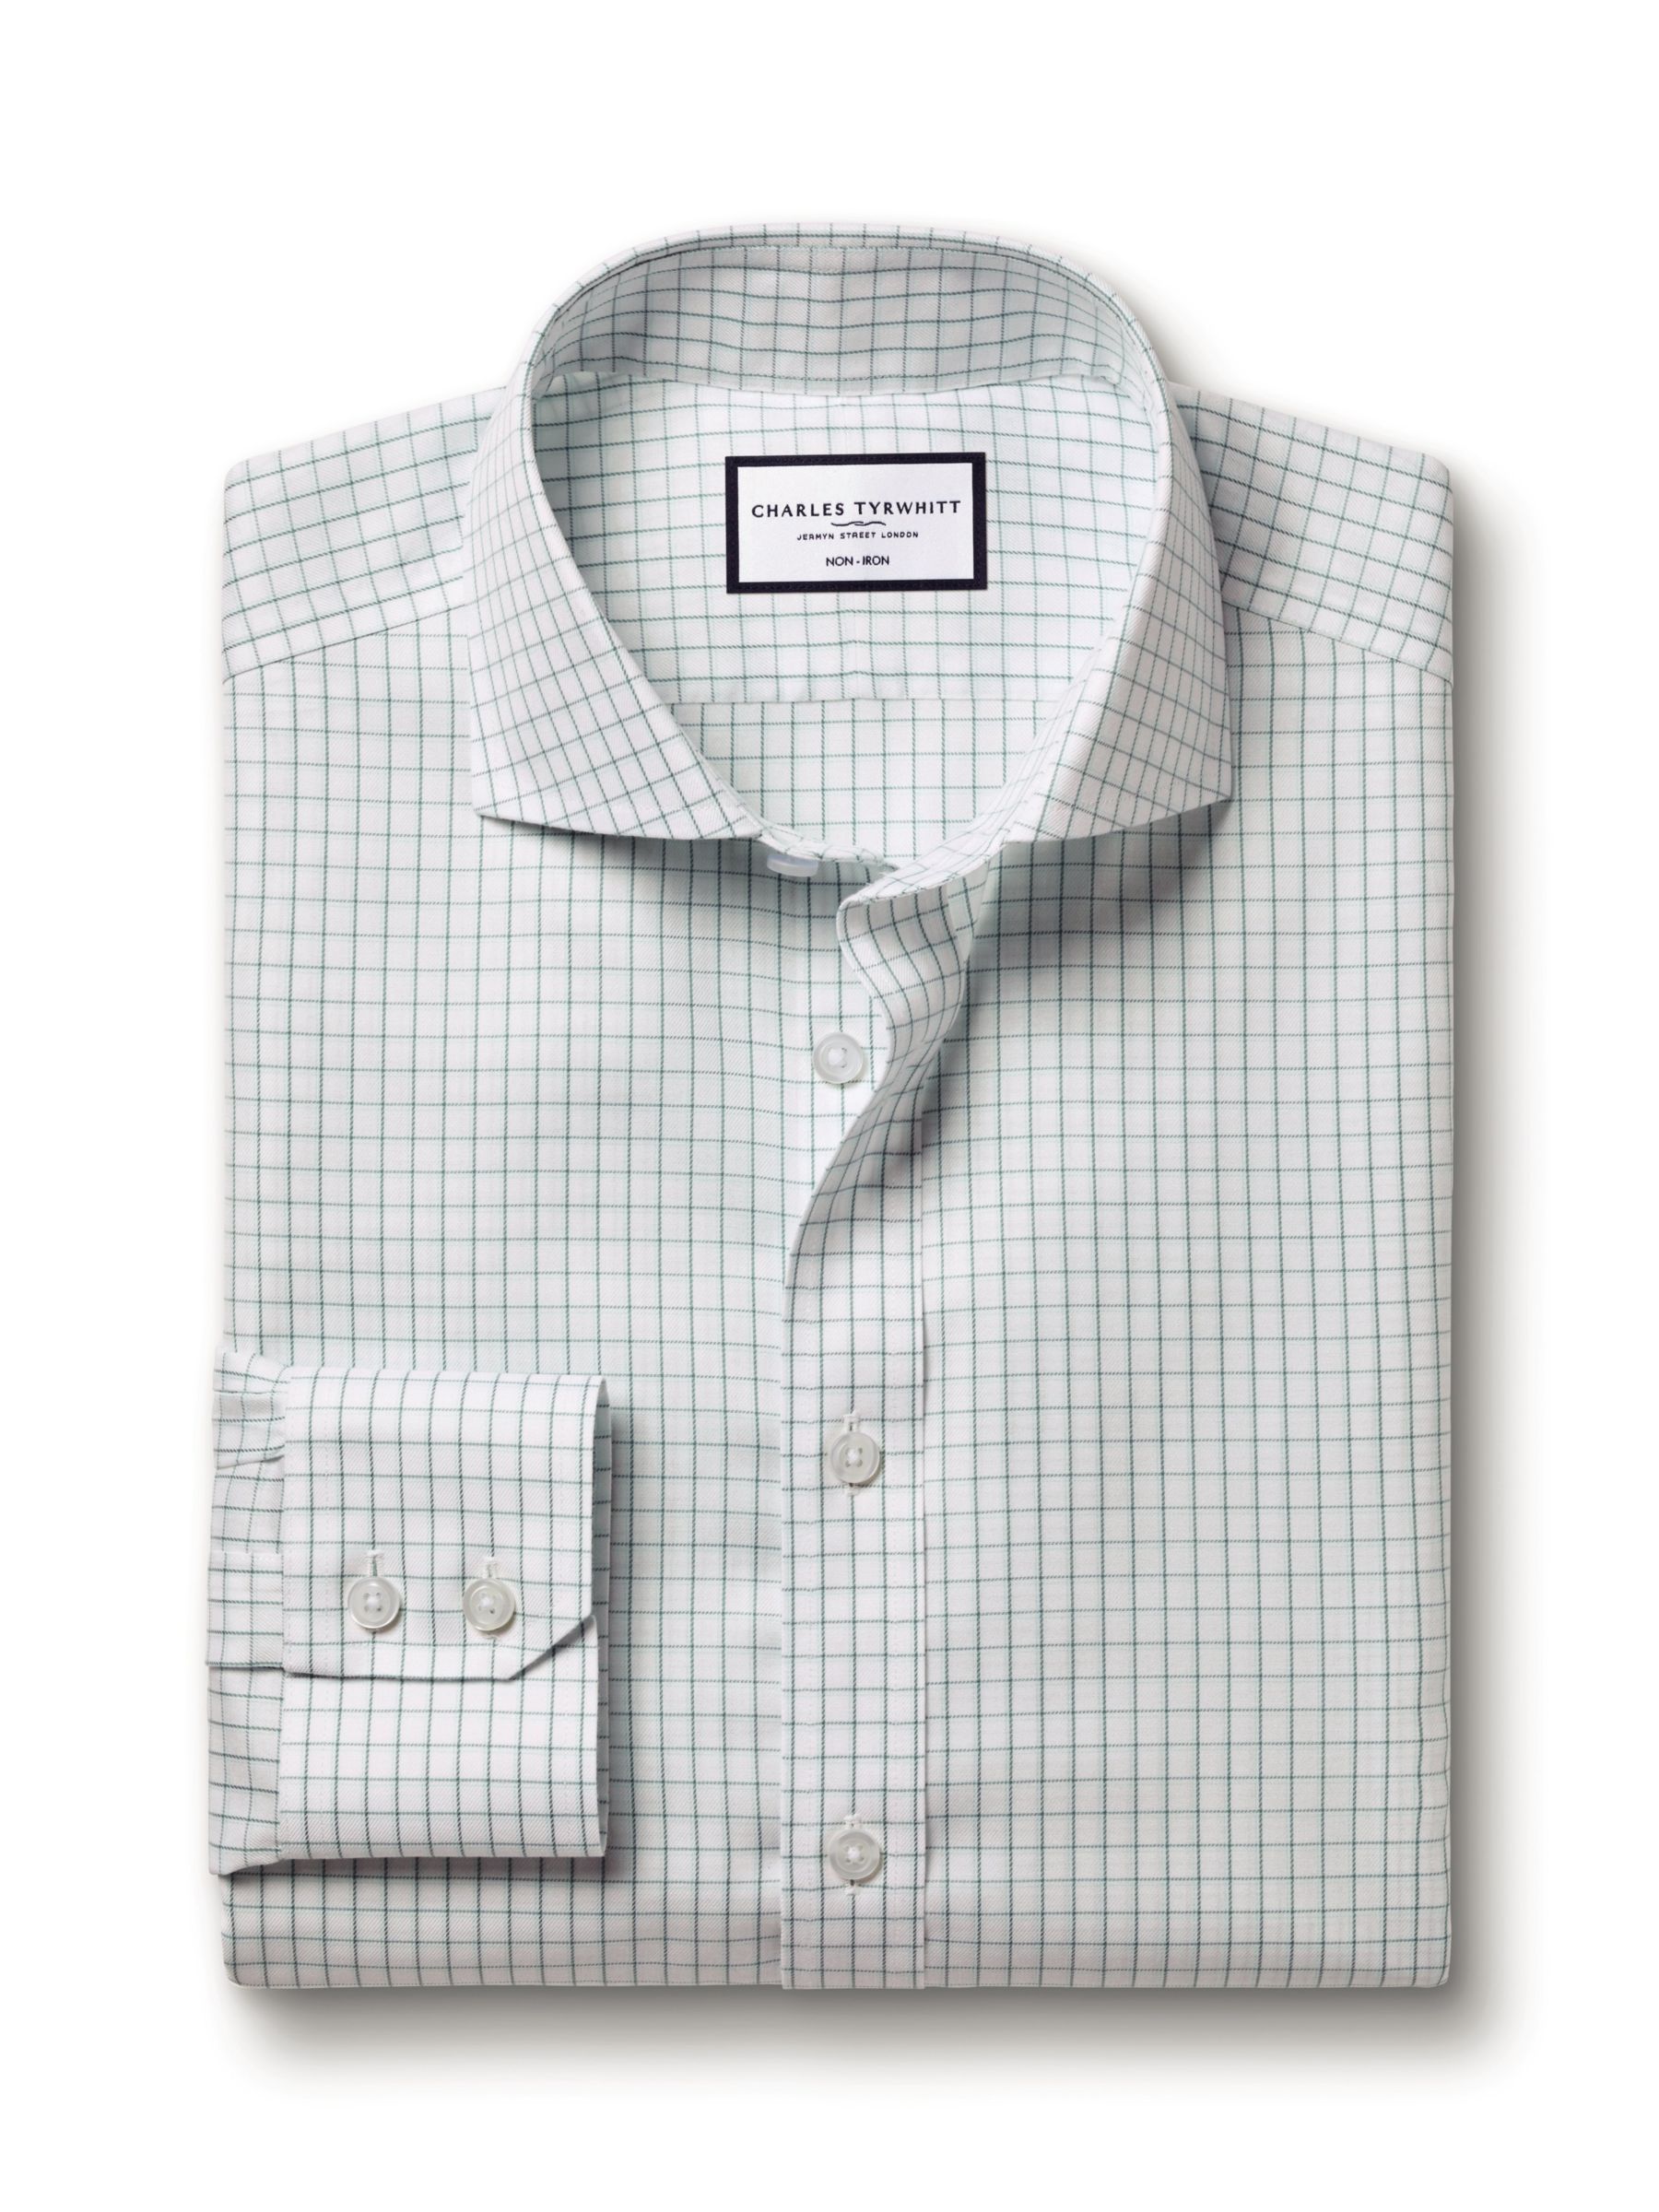 Charles Tyrwhitt Key Check Non-Iron Twill Shirt, Atlantic Green, 14.5 33